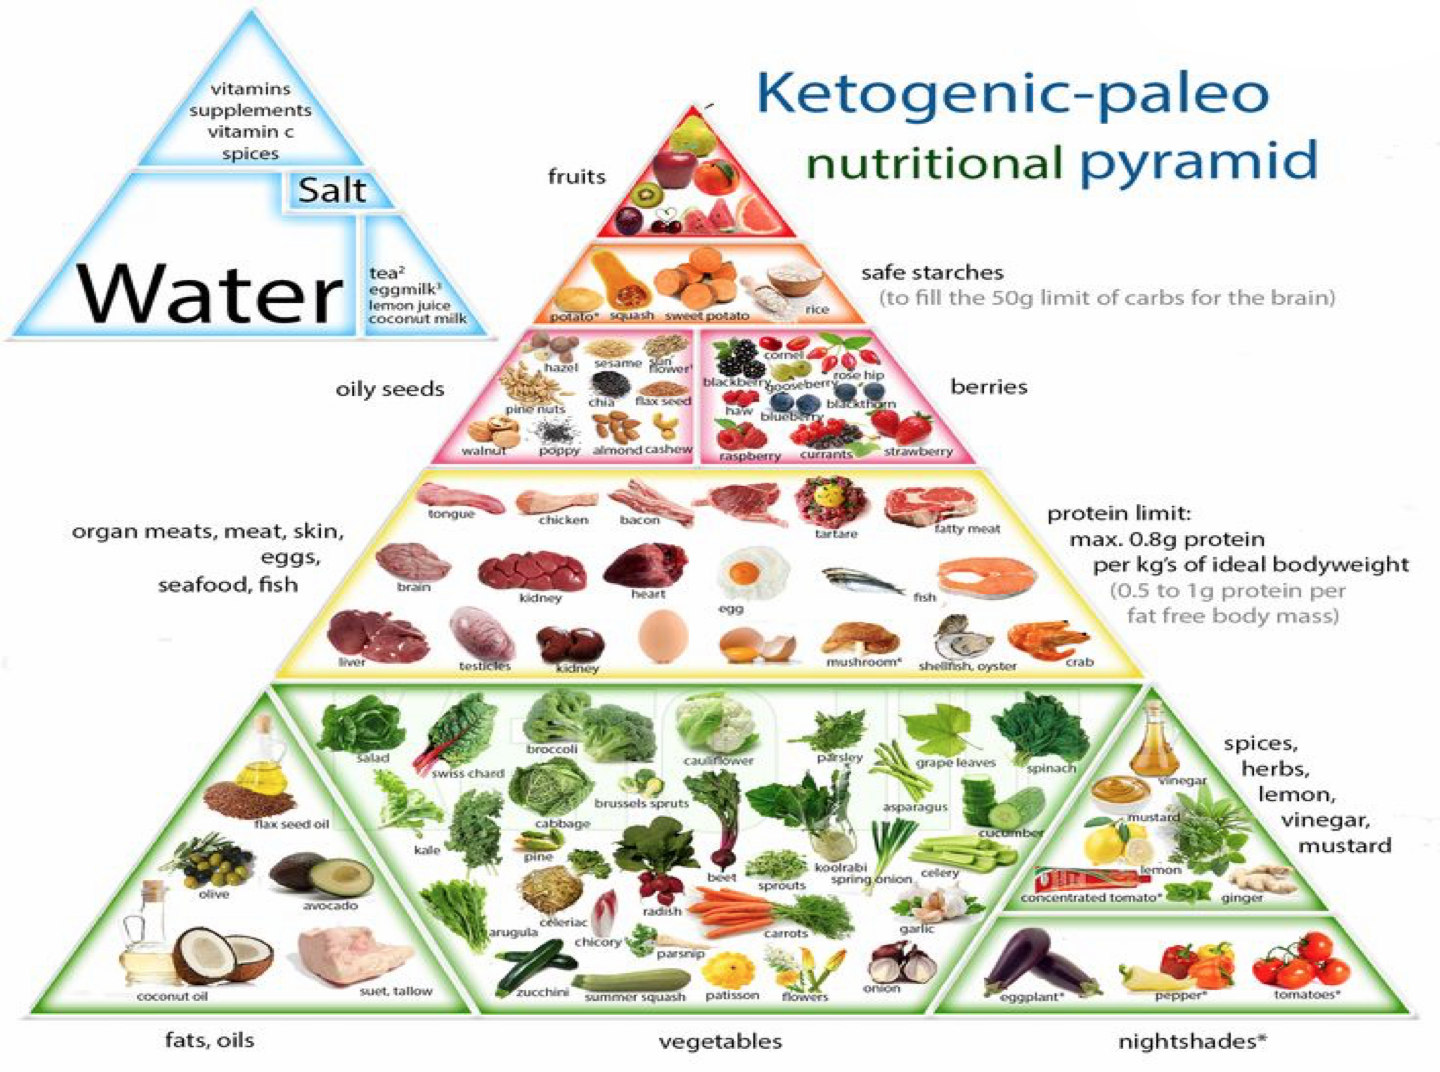 Paleo Pyramid Chart